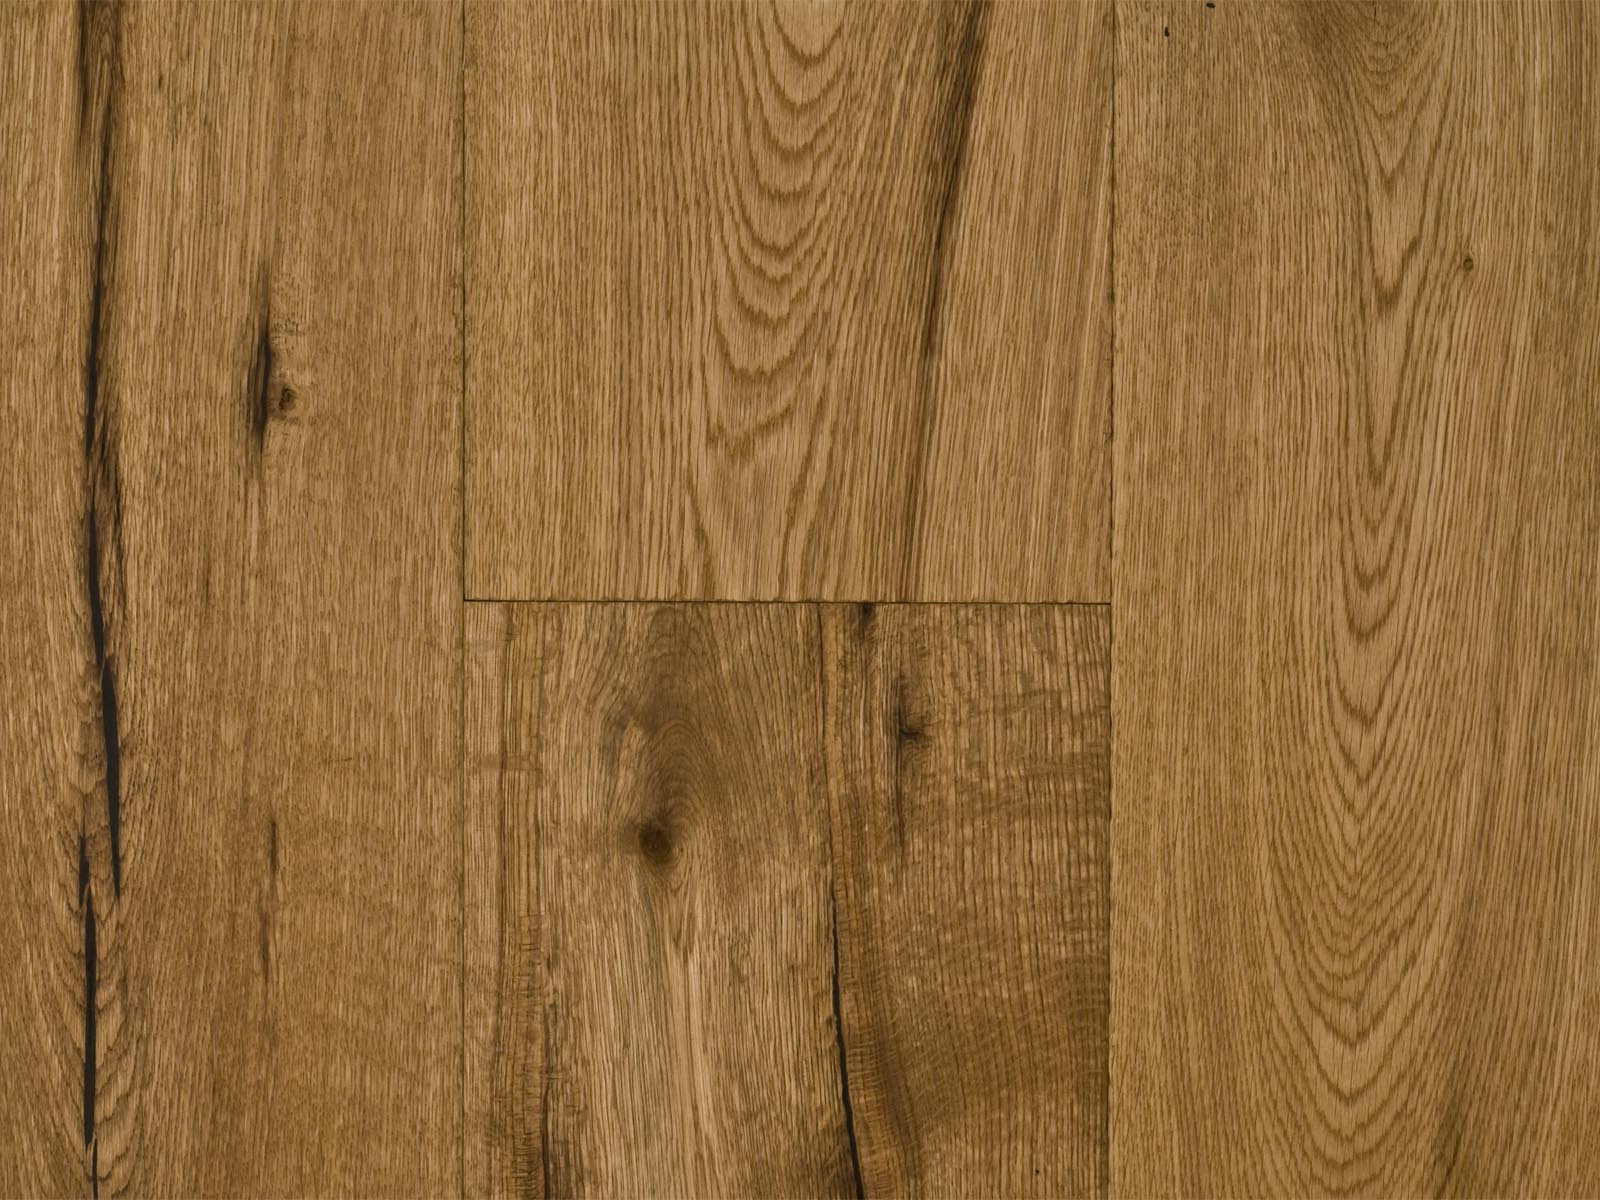 13 Amazing Hardwood Floor wholesale Distributors 2024 free download hardwood floor wholesale distributors of duchateau hardwood flooring houston tx discount engineered wood in natural european oak